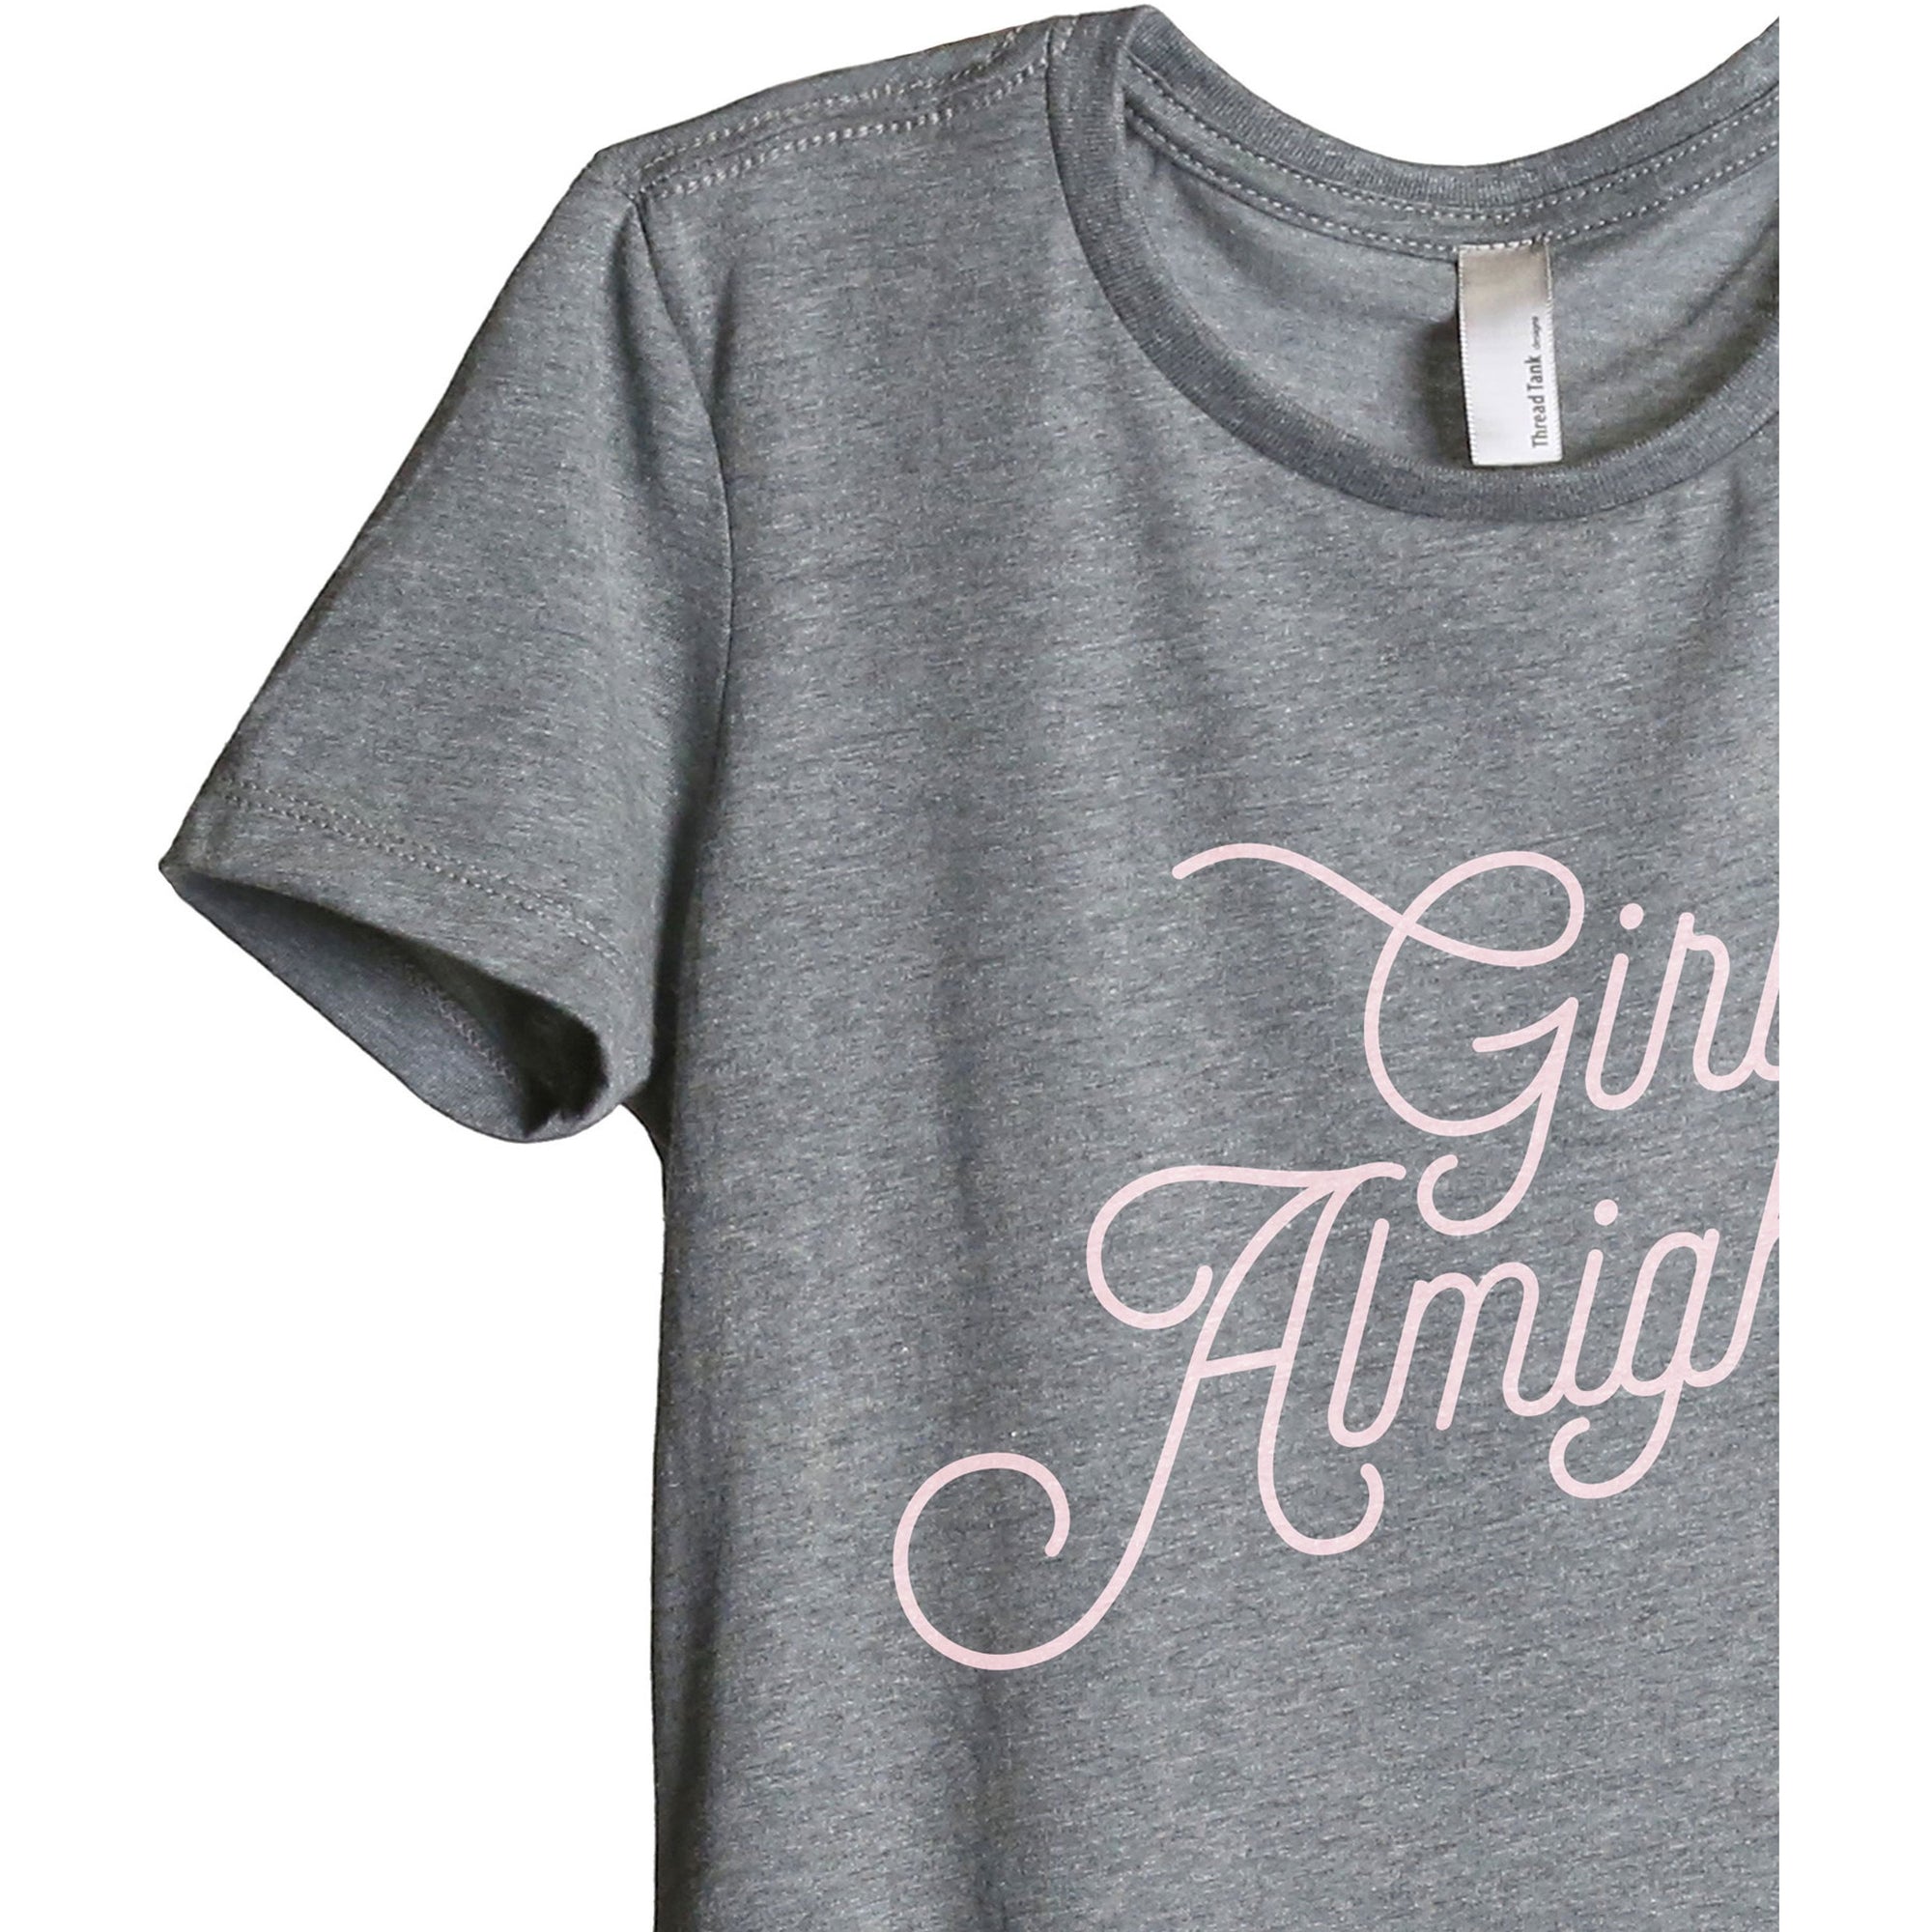 Girl Almighty Women's Relaxed Crewneck T-Shirt Top Tee Heather Grey